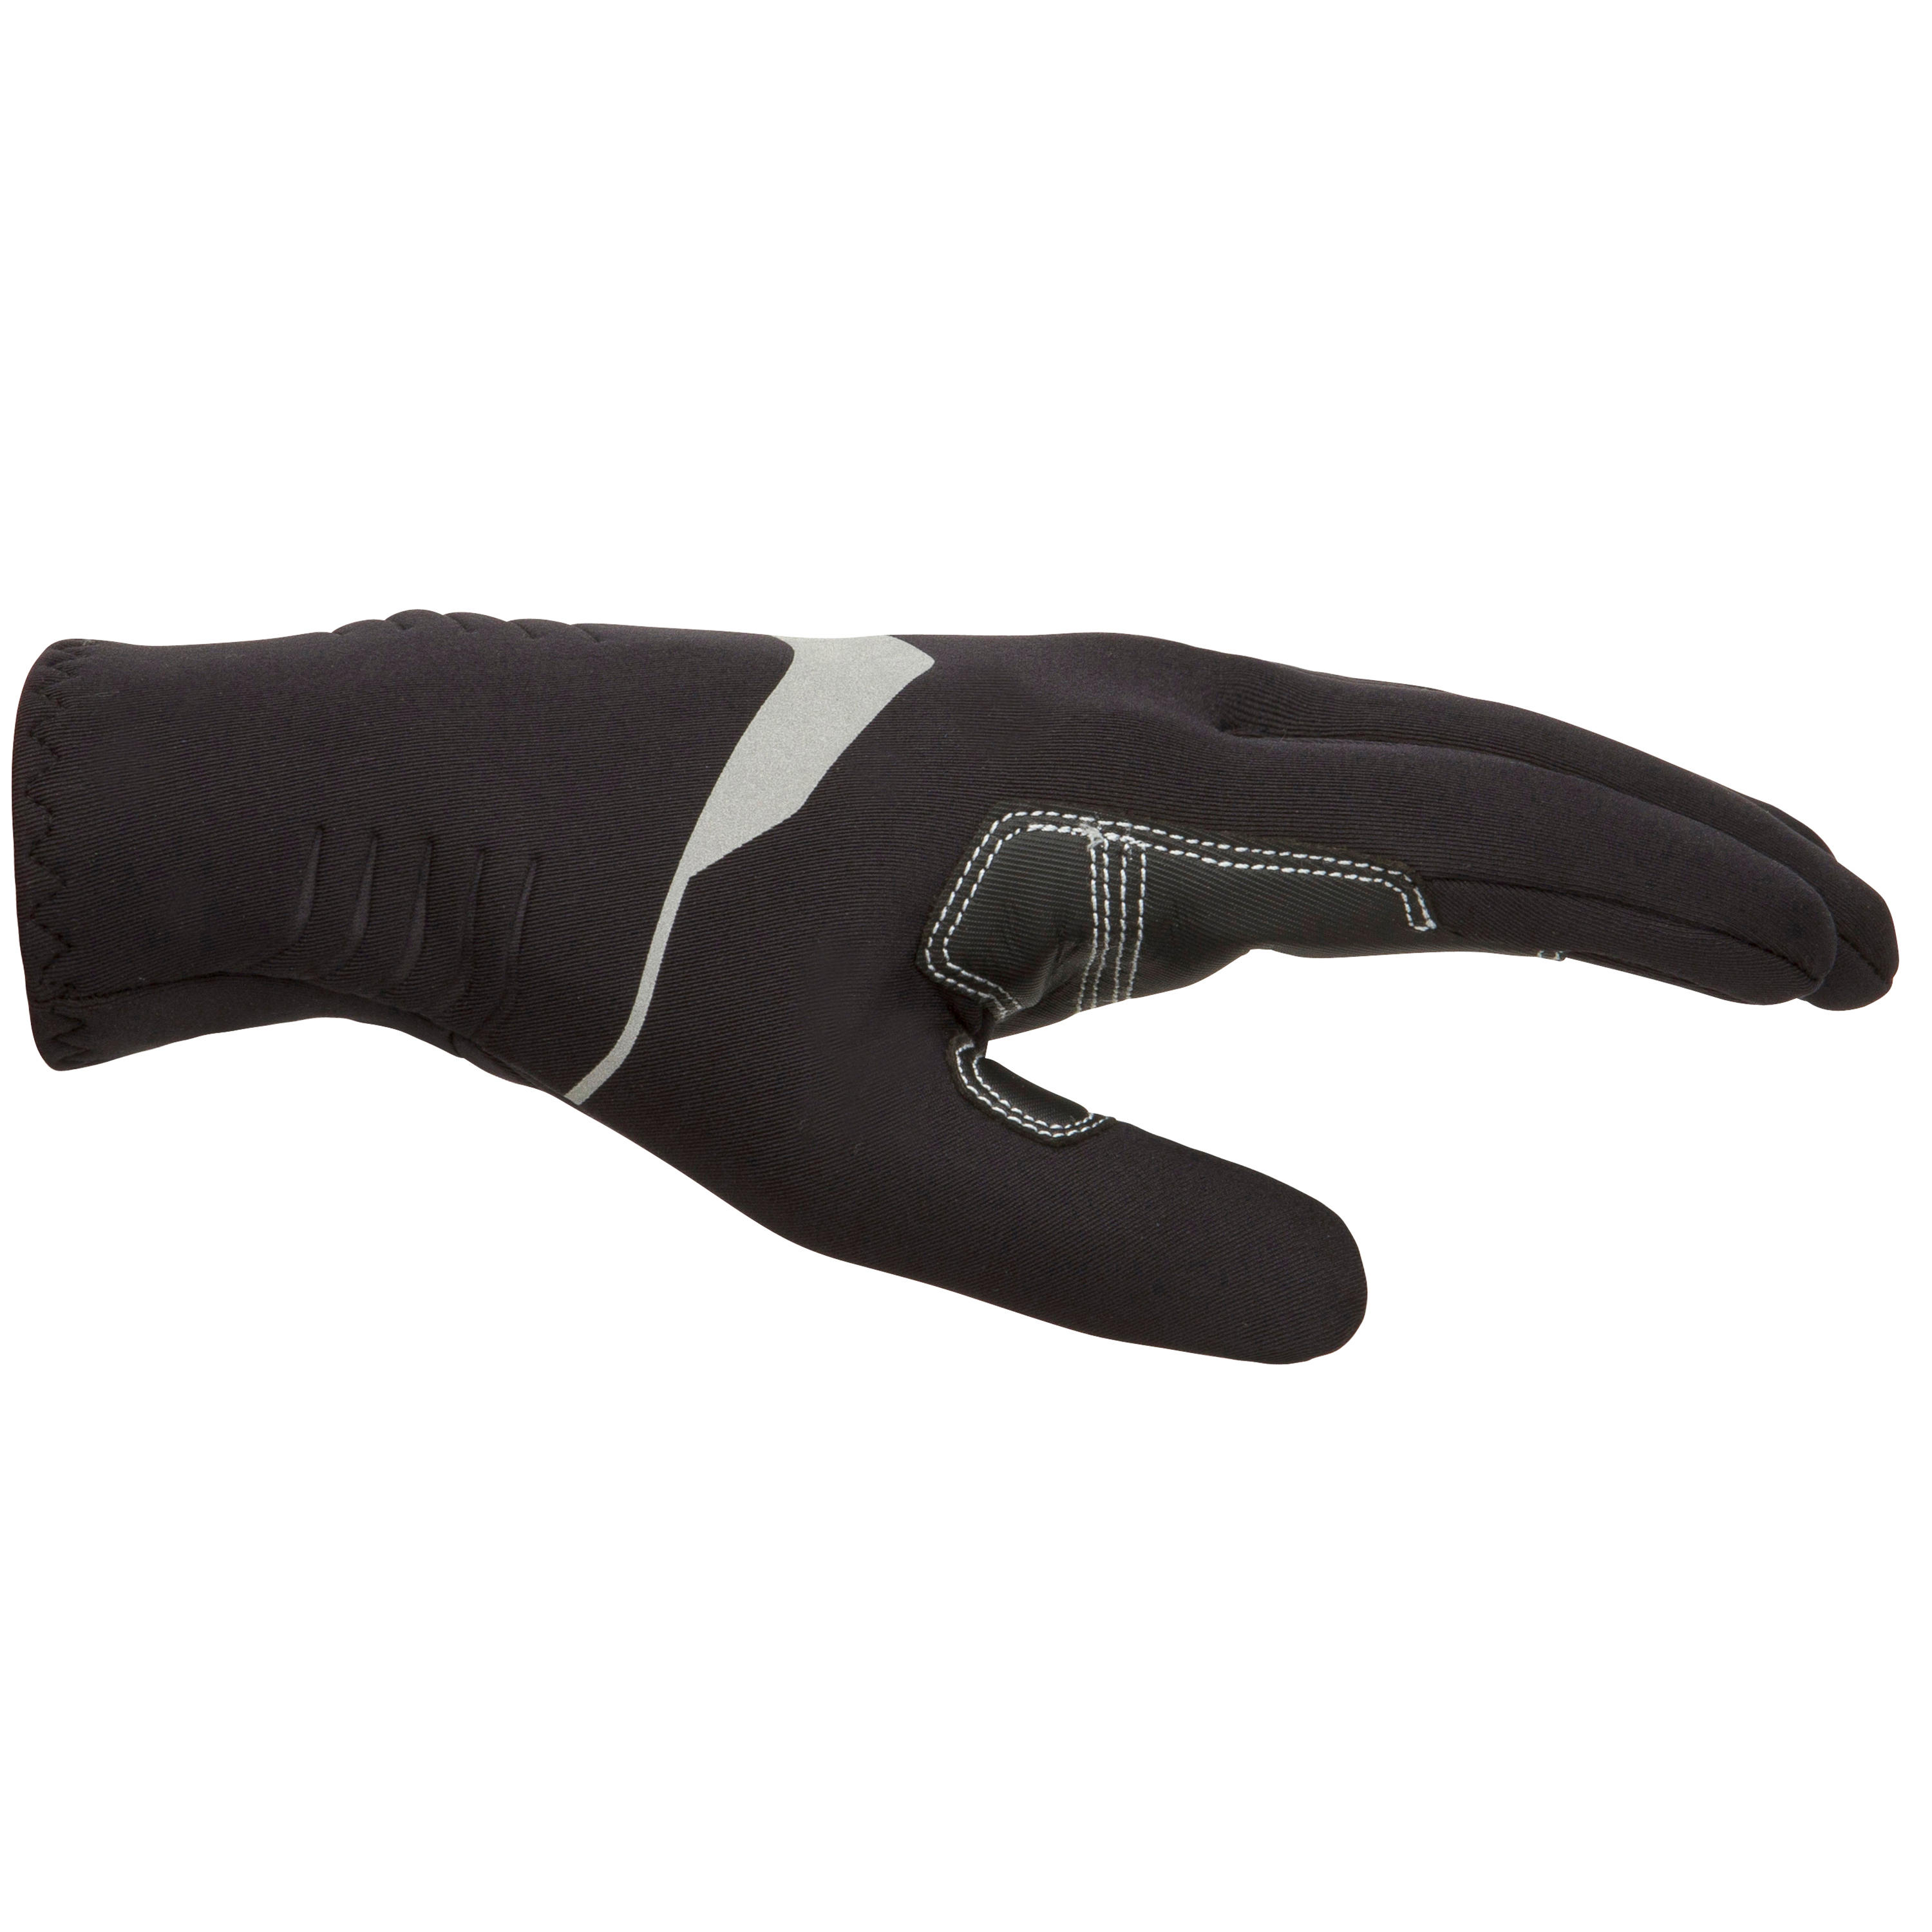 Adult sailing gloves 900 - 1 mm neoprene, black 4/5